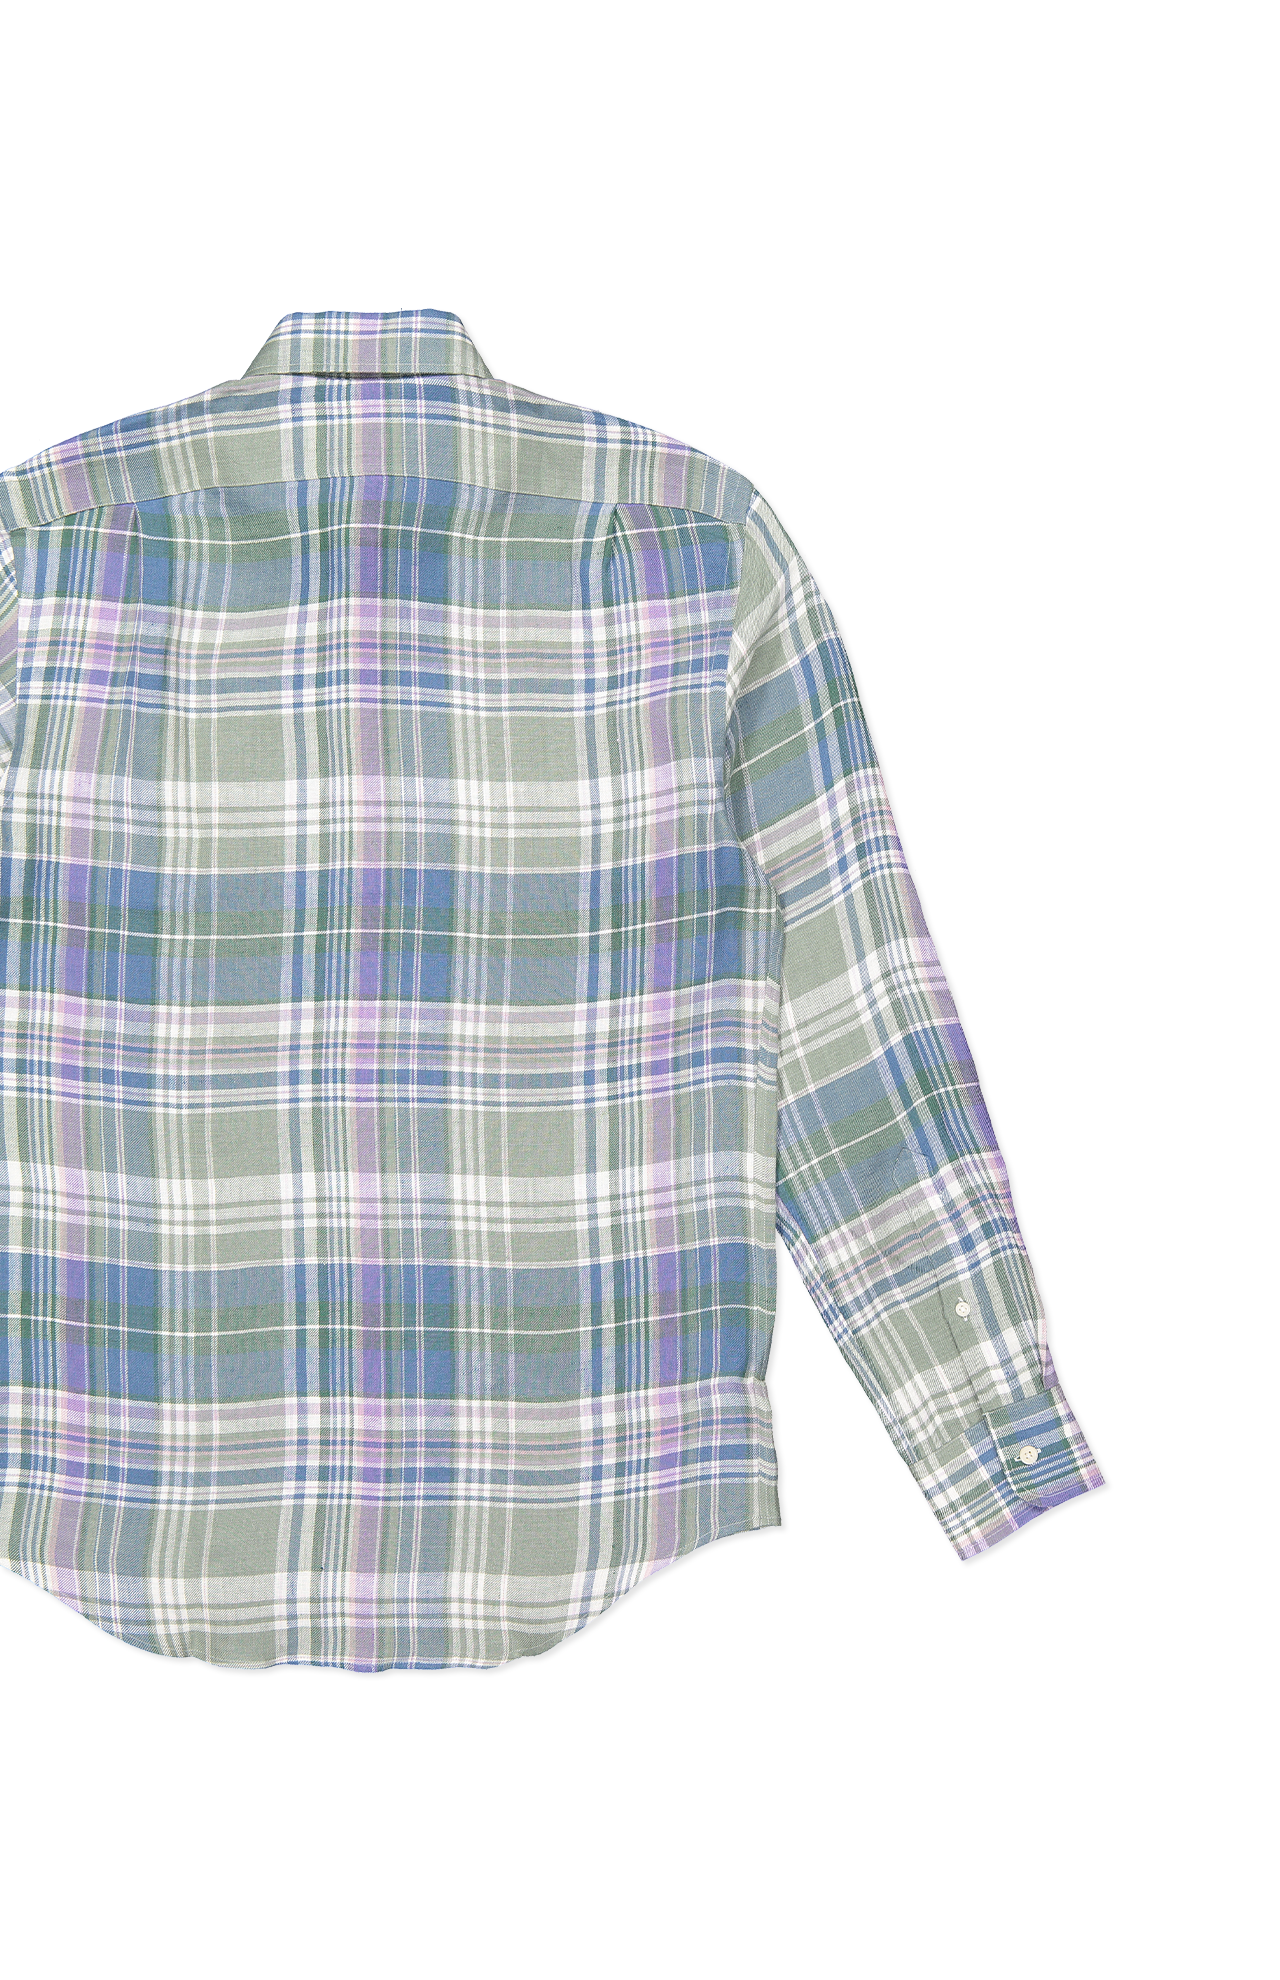 Ralph Lauren Sueded Linen Shirt Multicolor Back Flat Lay Image (6865391386739)